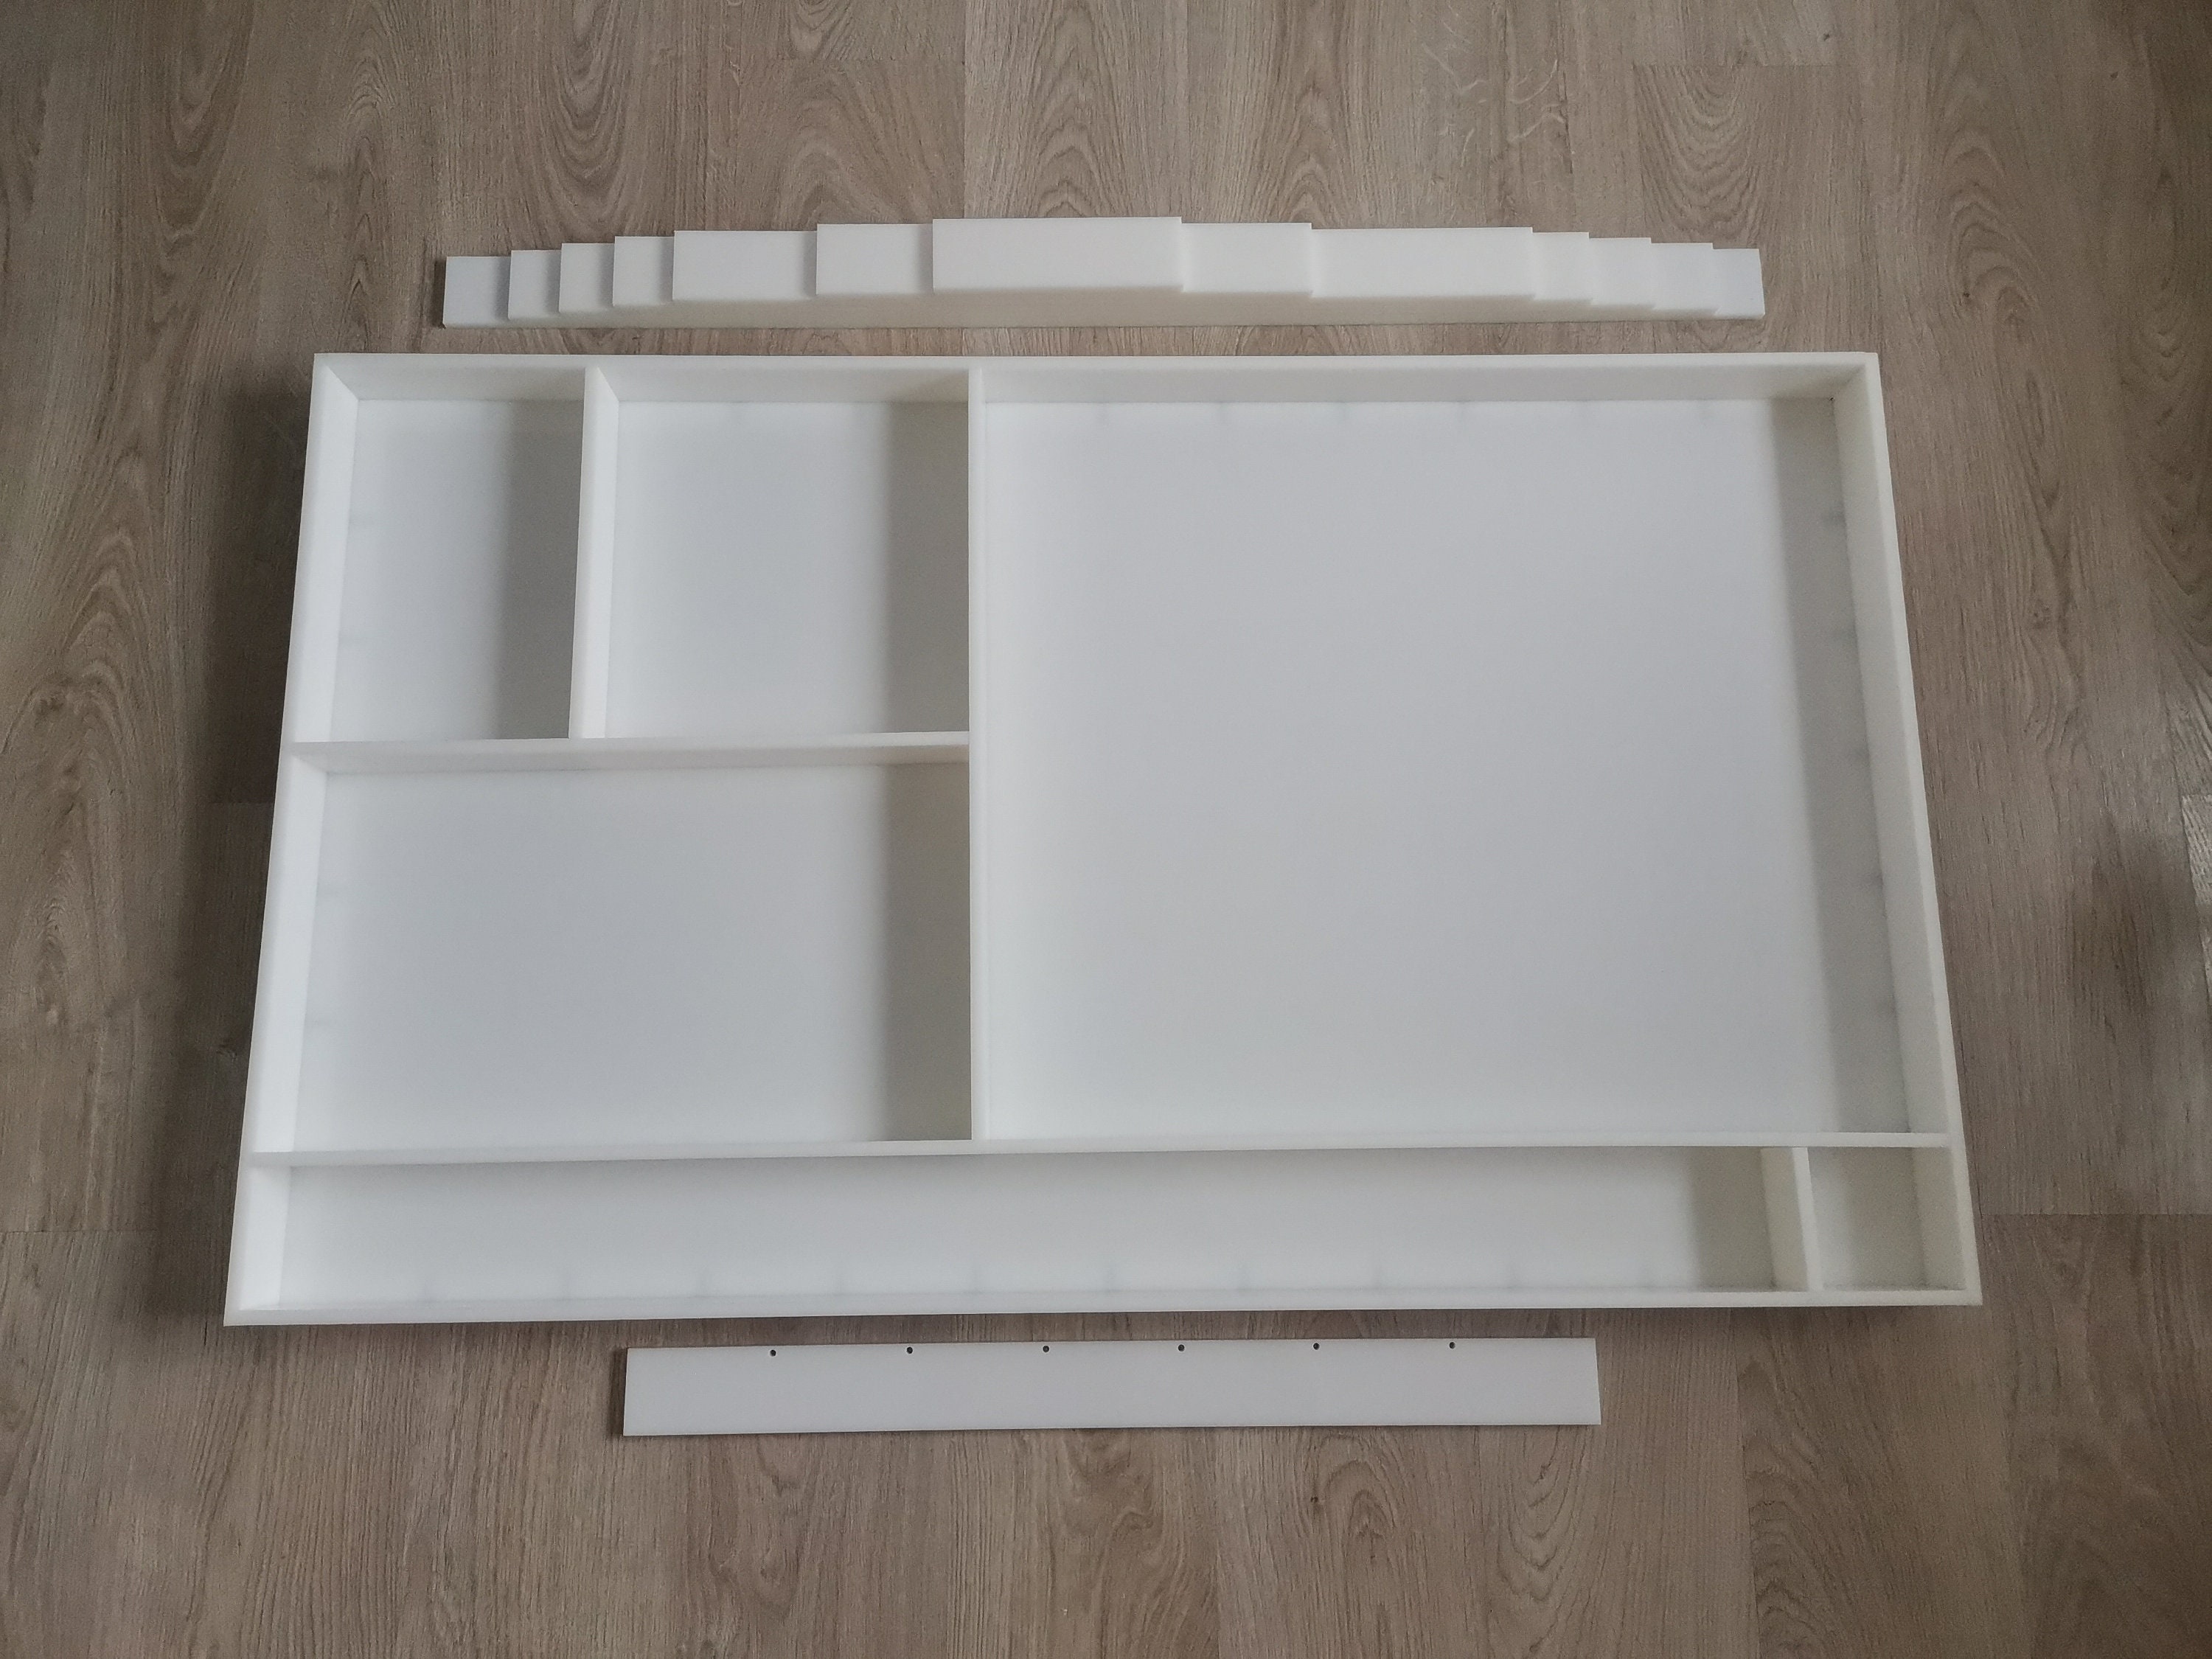 HDPE Resin Table Mold - 10.5x18.5x3.2